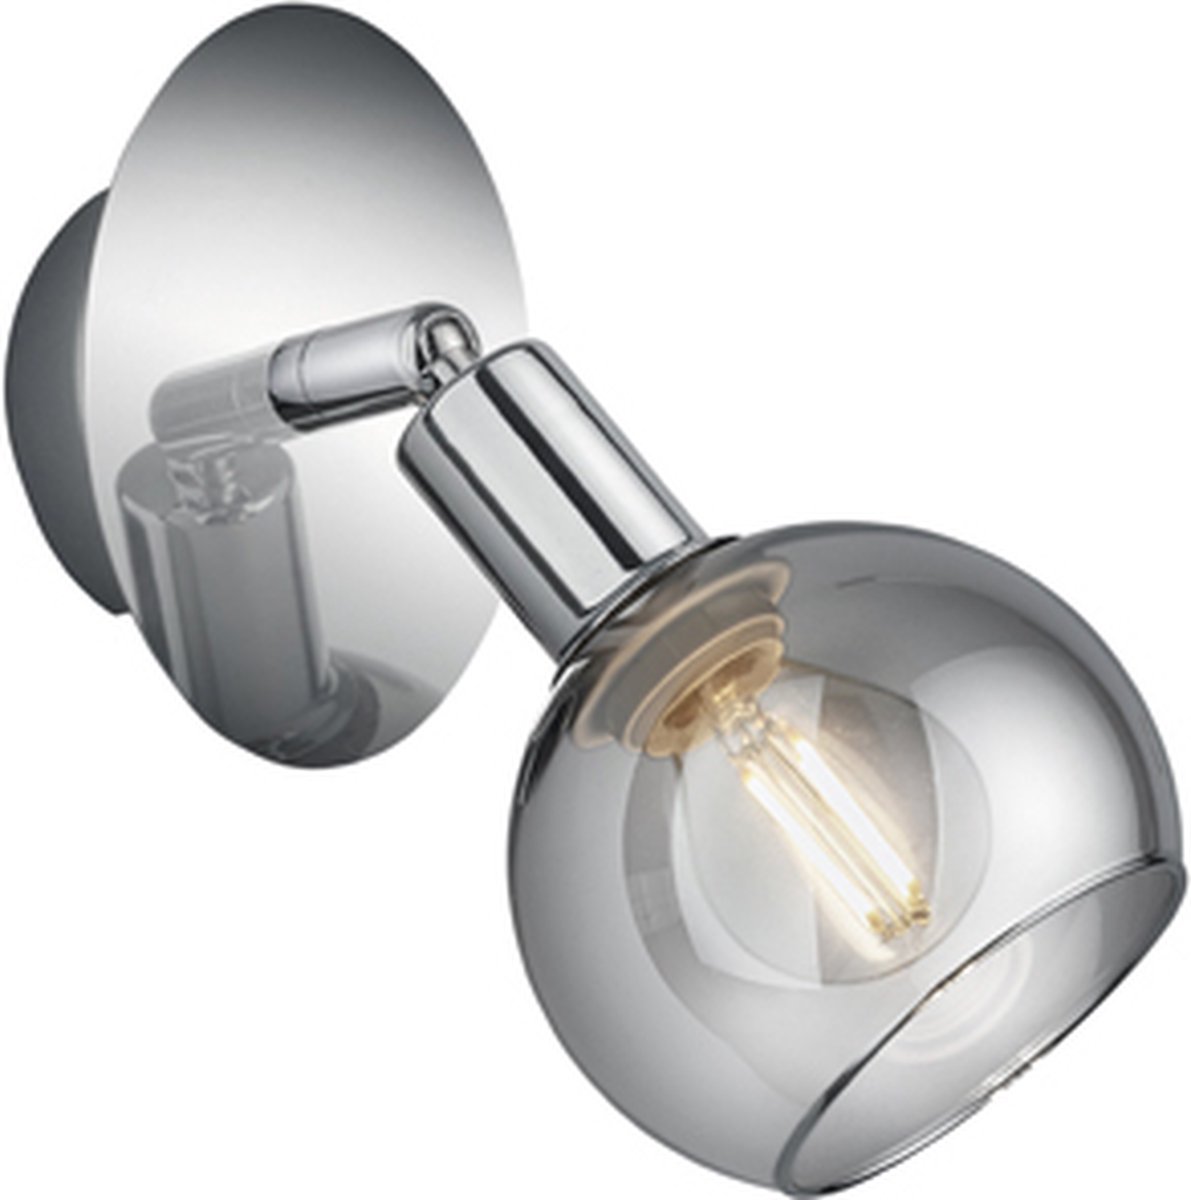 Reality Brest - Plafondlamp Modern - Chroom - H:18cm - E14 - Voor Binnen - Metaal - Plafondlampen - Slaapkamer - Kinderkamer - Woonkamer - Plafonnieres